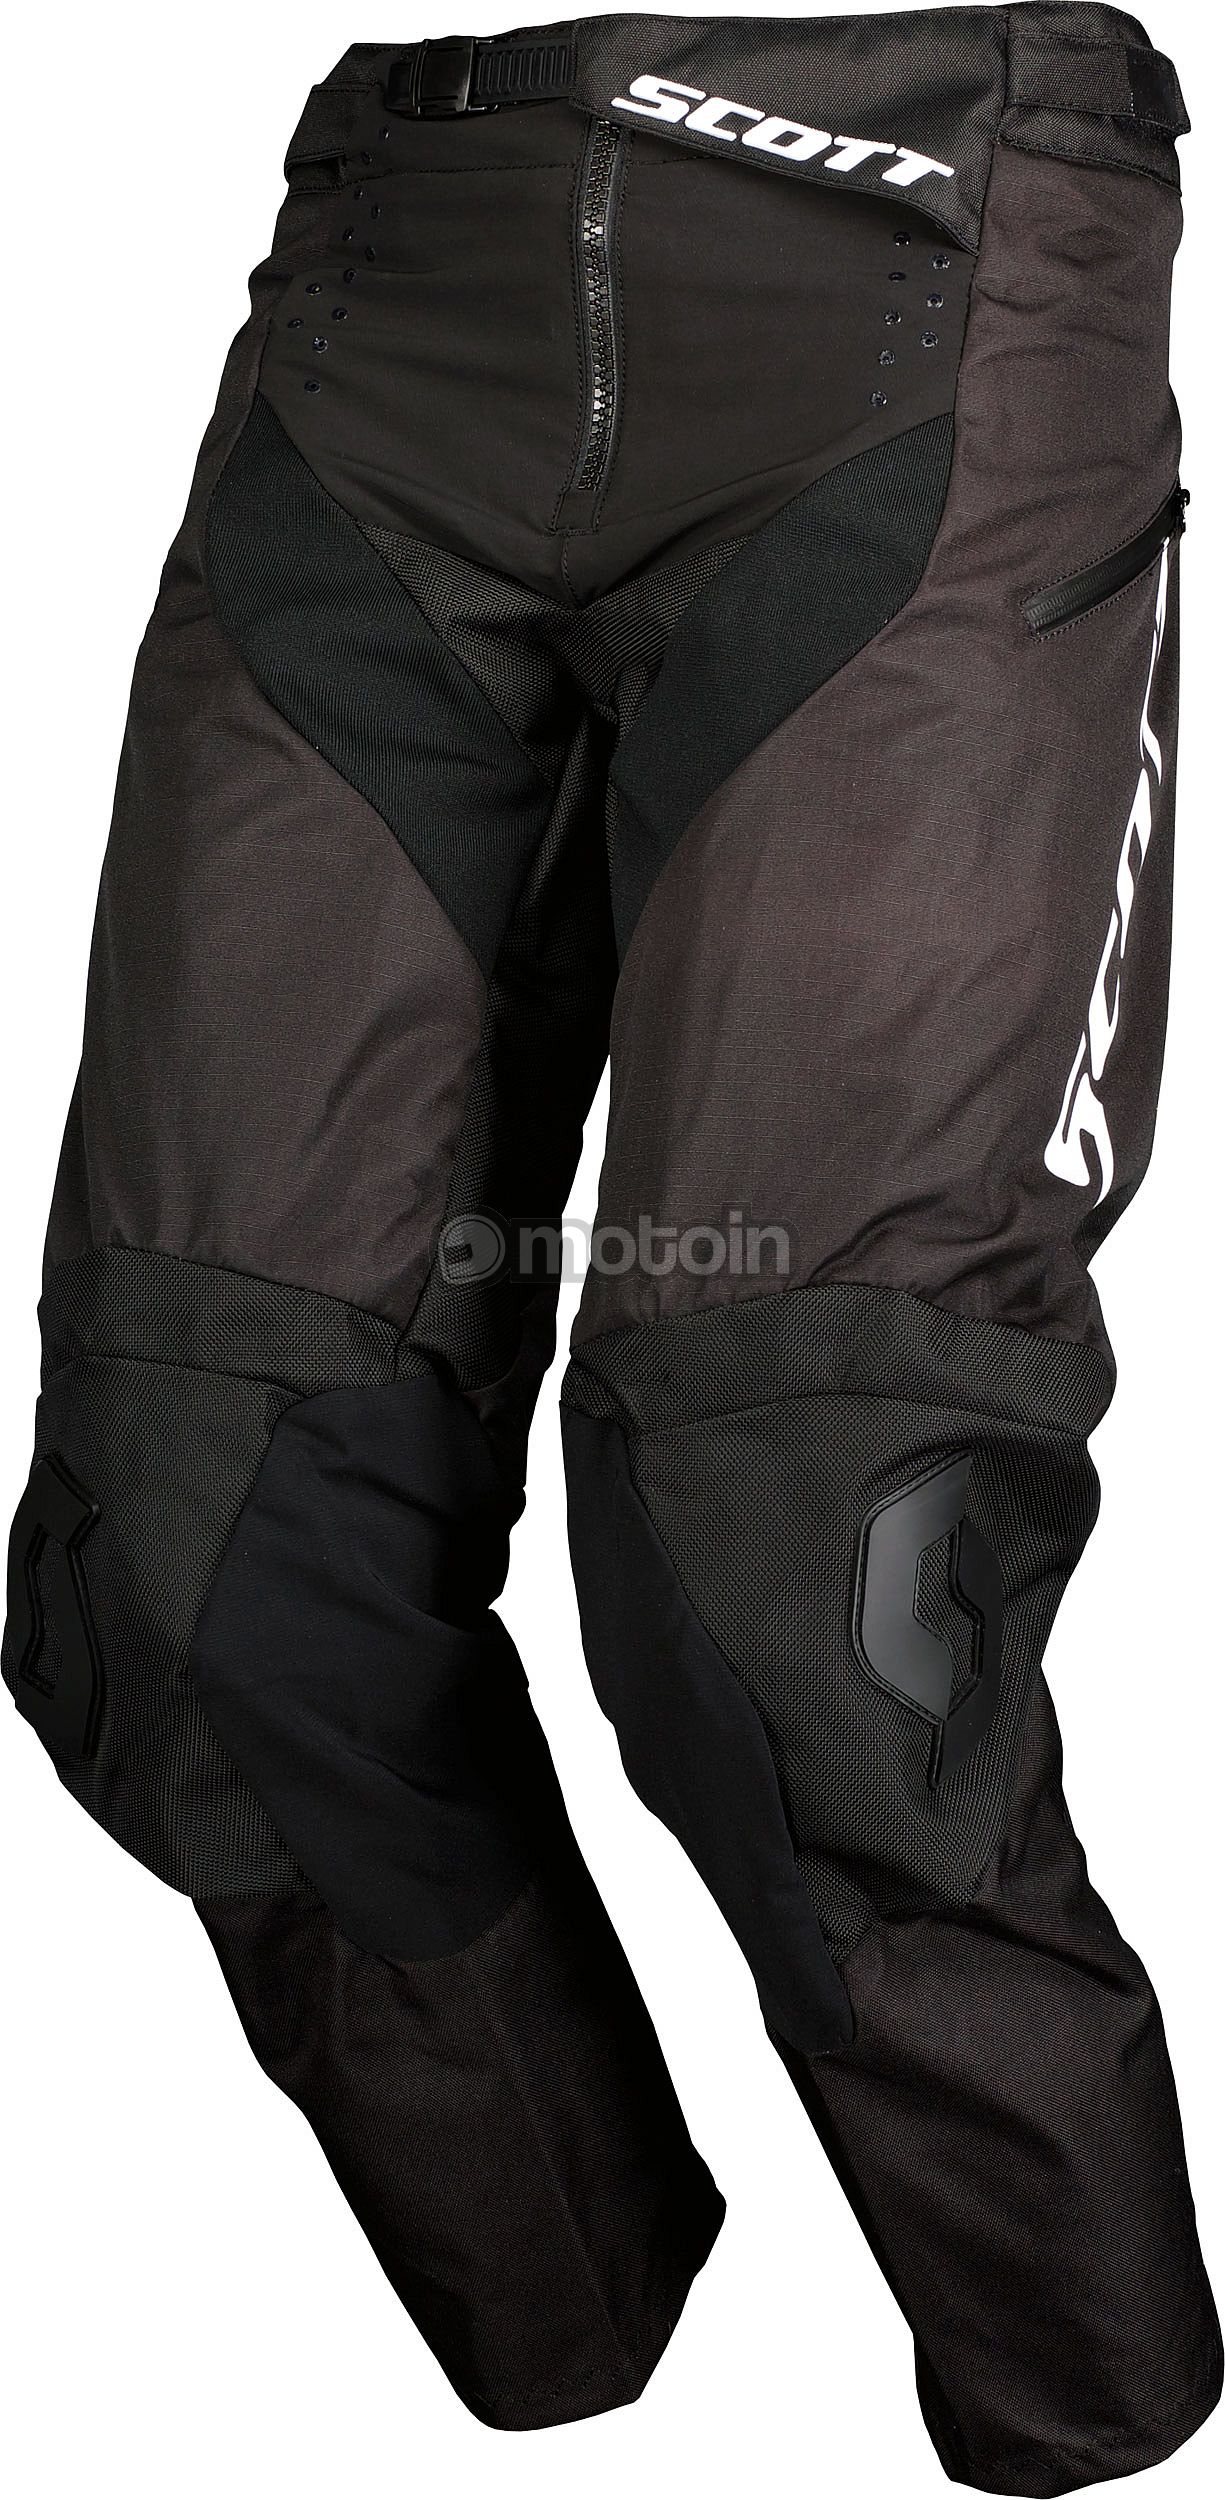 Scott X-Plore Swap ITB S23, pantaloni in tessuto negli stivali